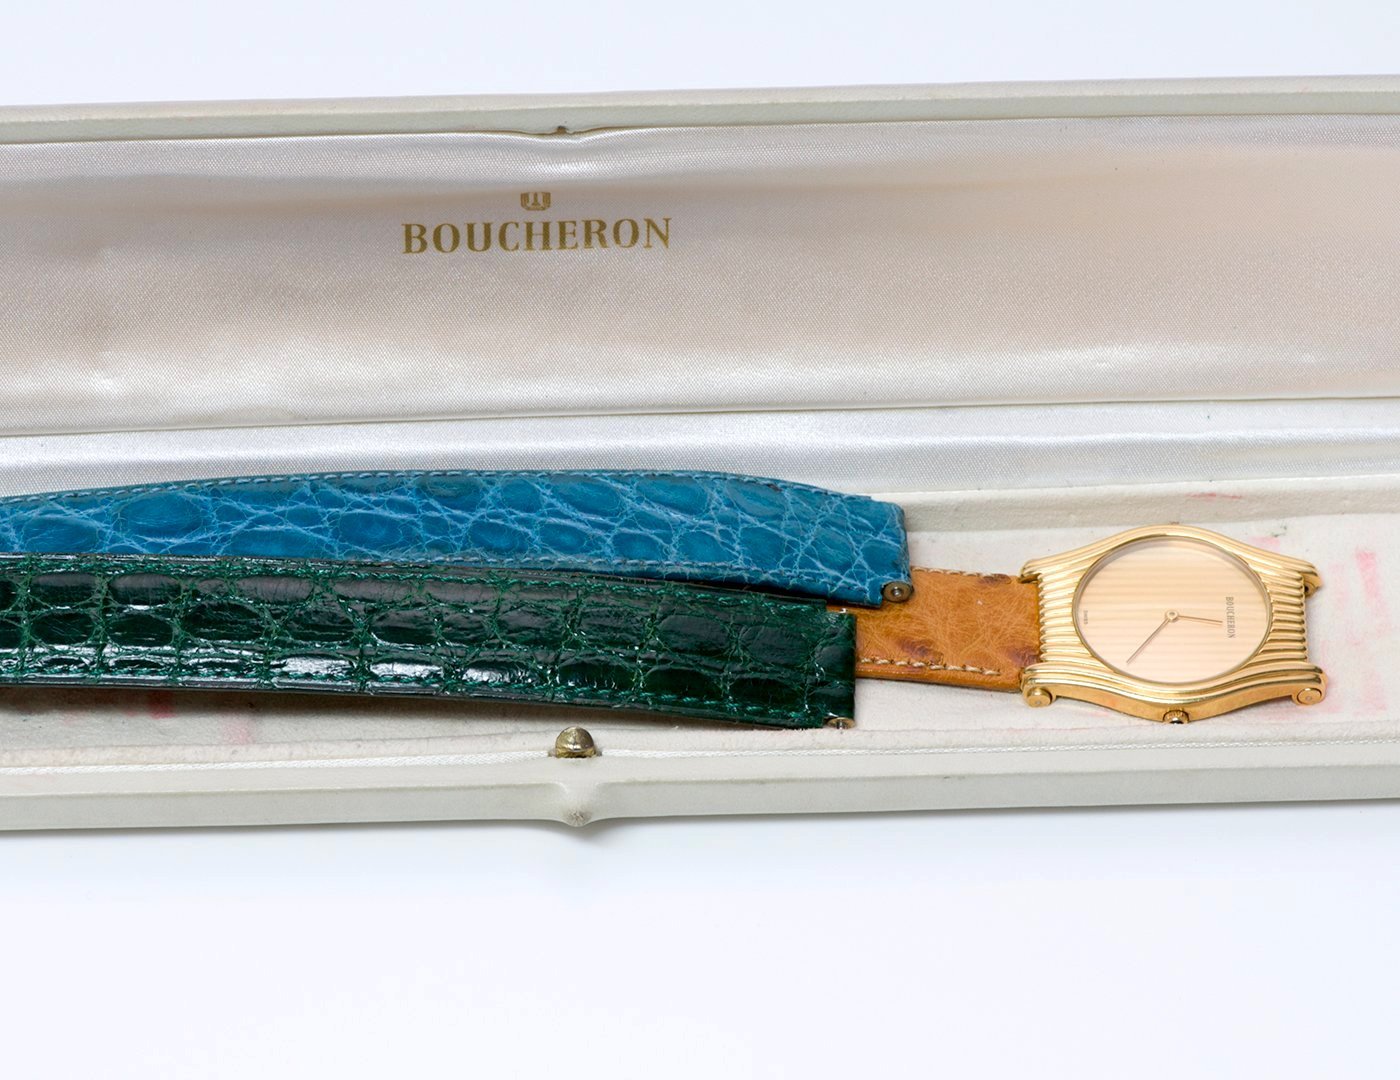 Boucheron Reflet Gold Watch